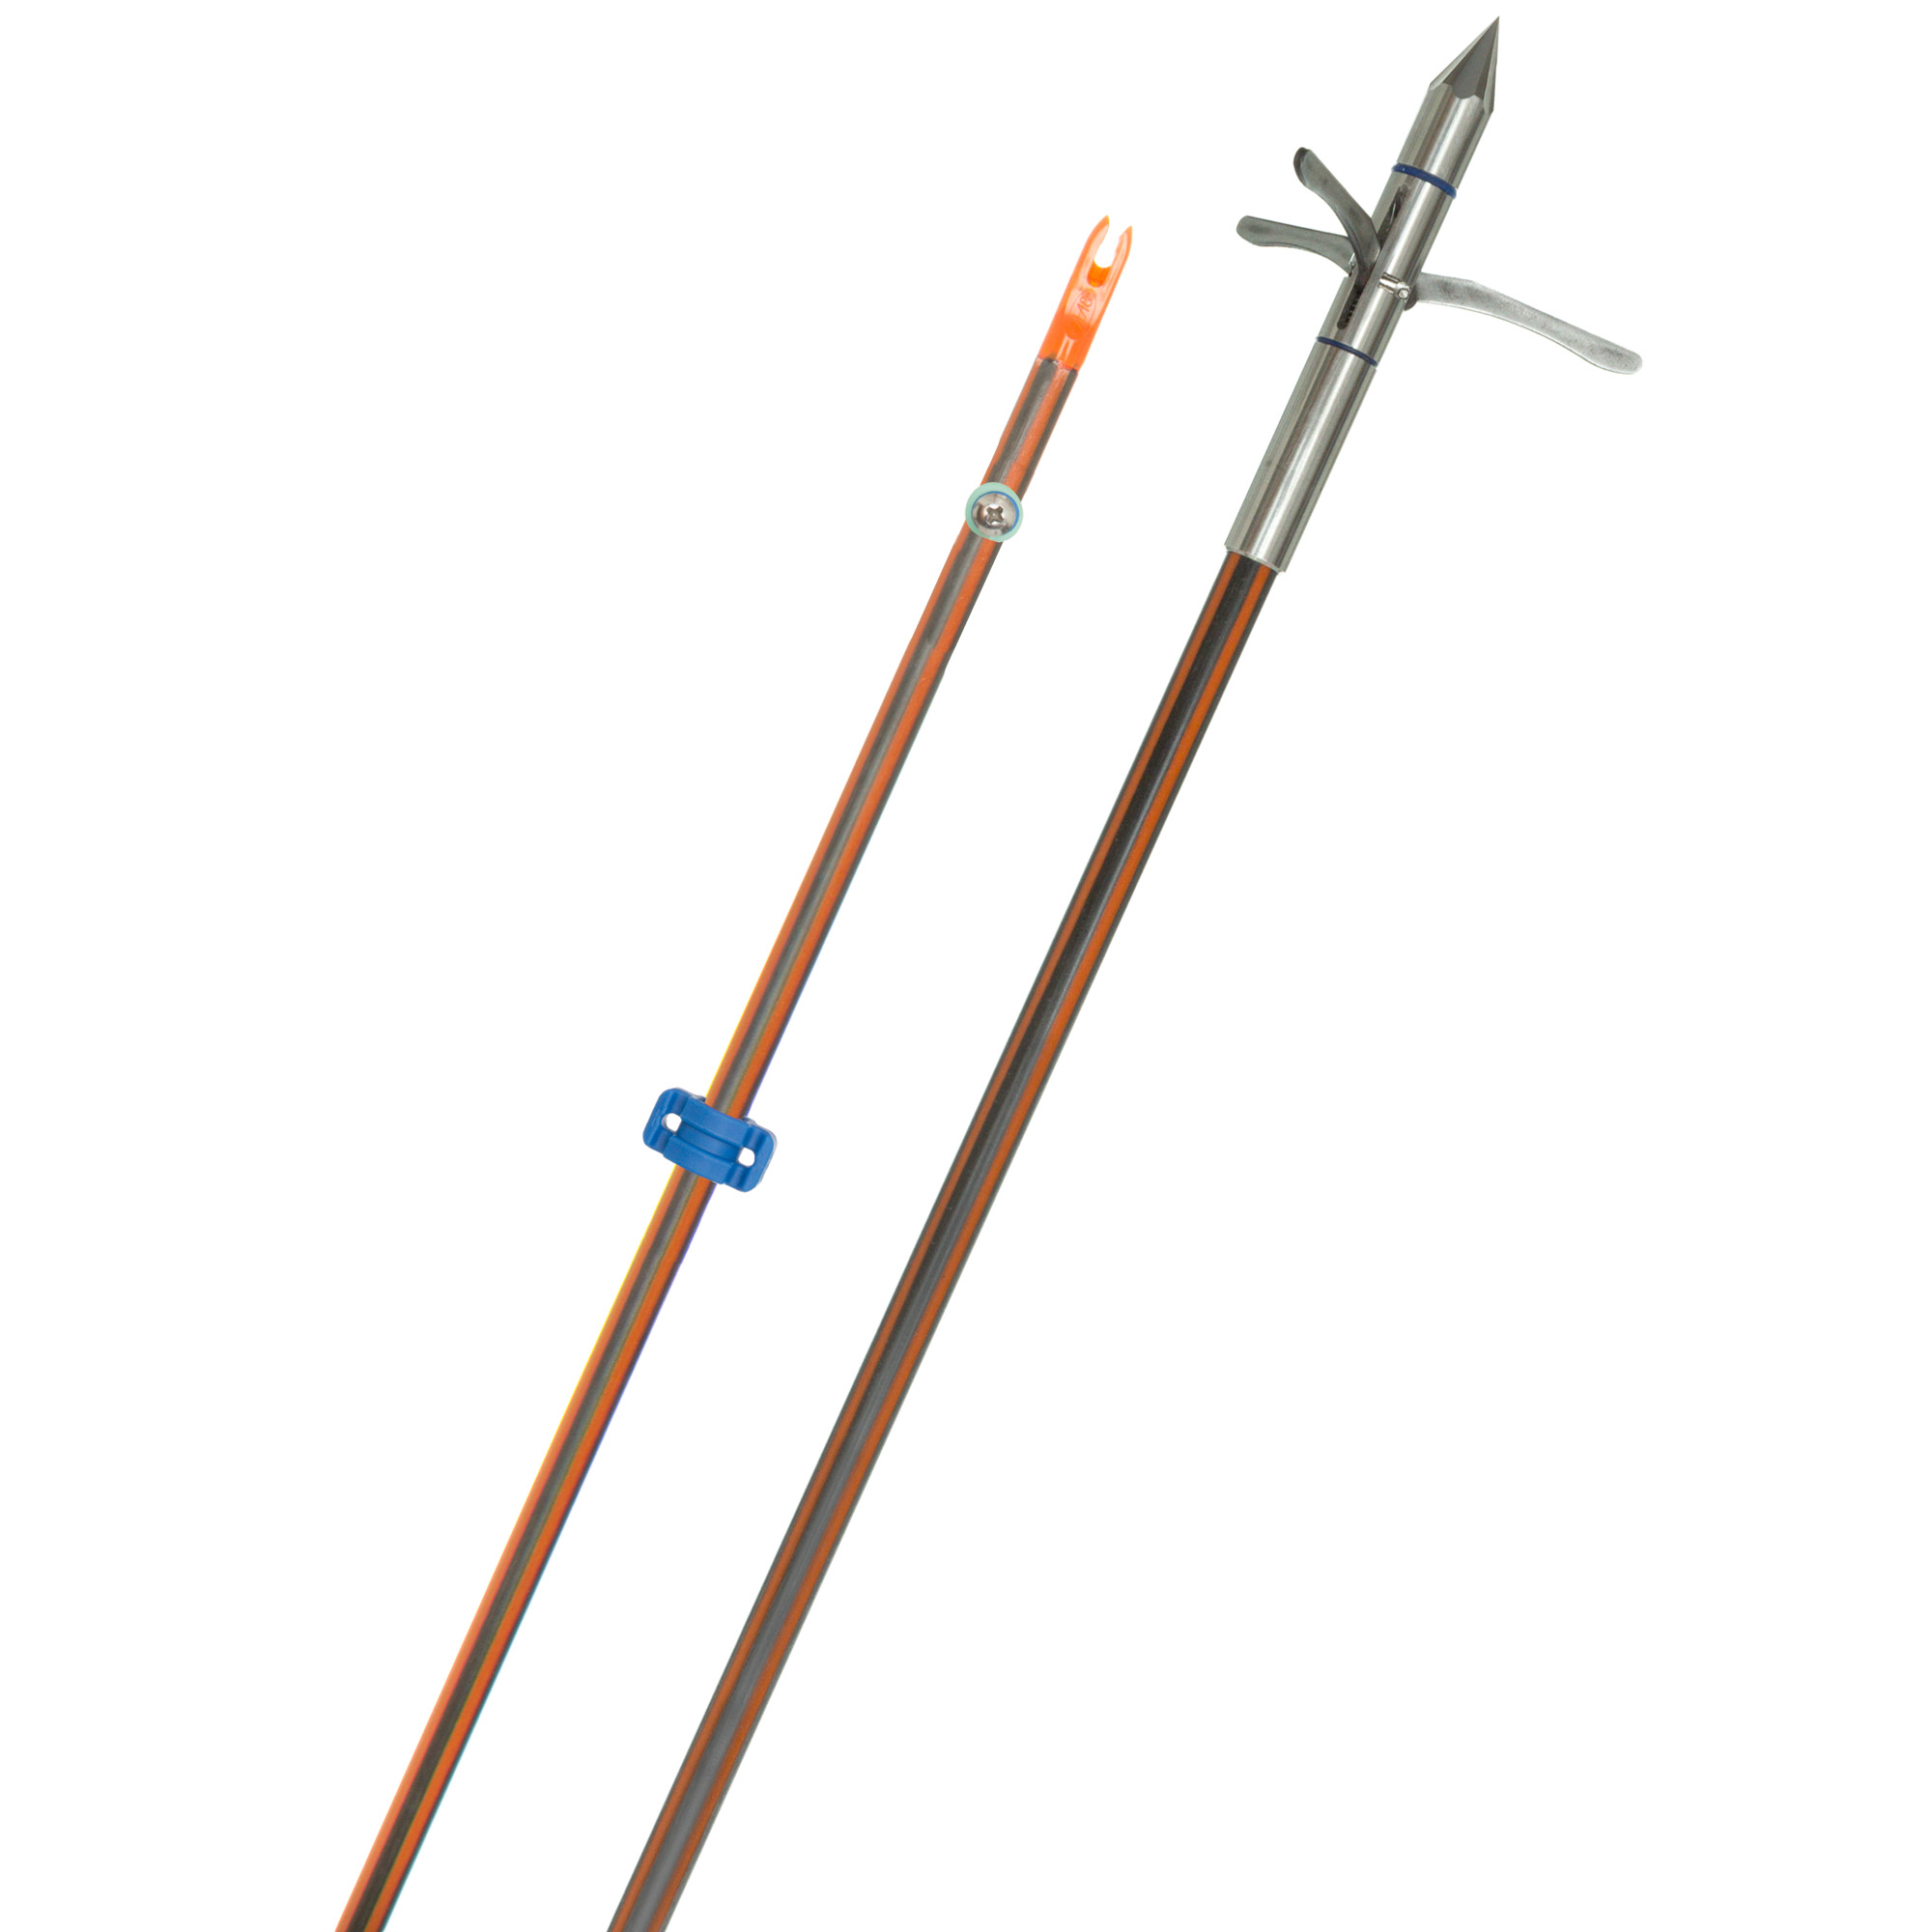 Hydro-Carbon IL Bowfishing Arrow w/The Kraken 3 Barb Point